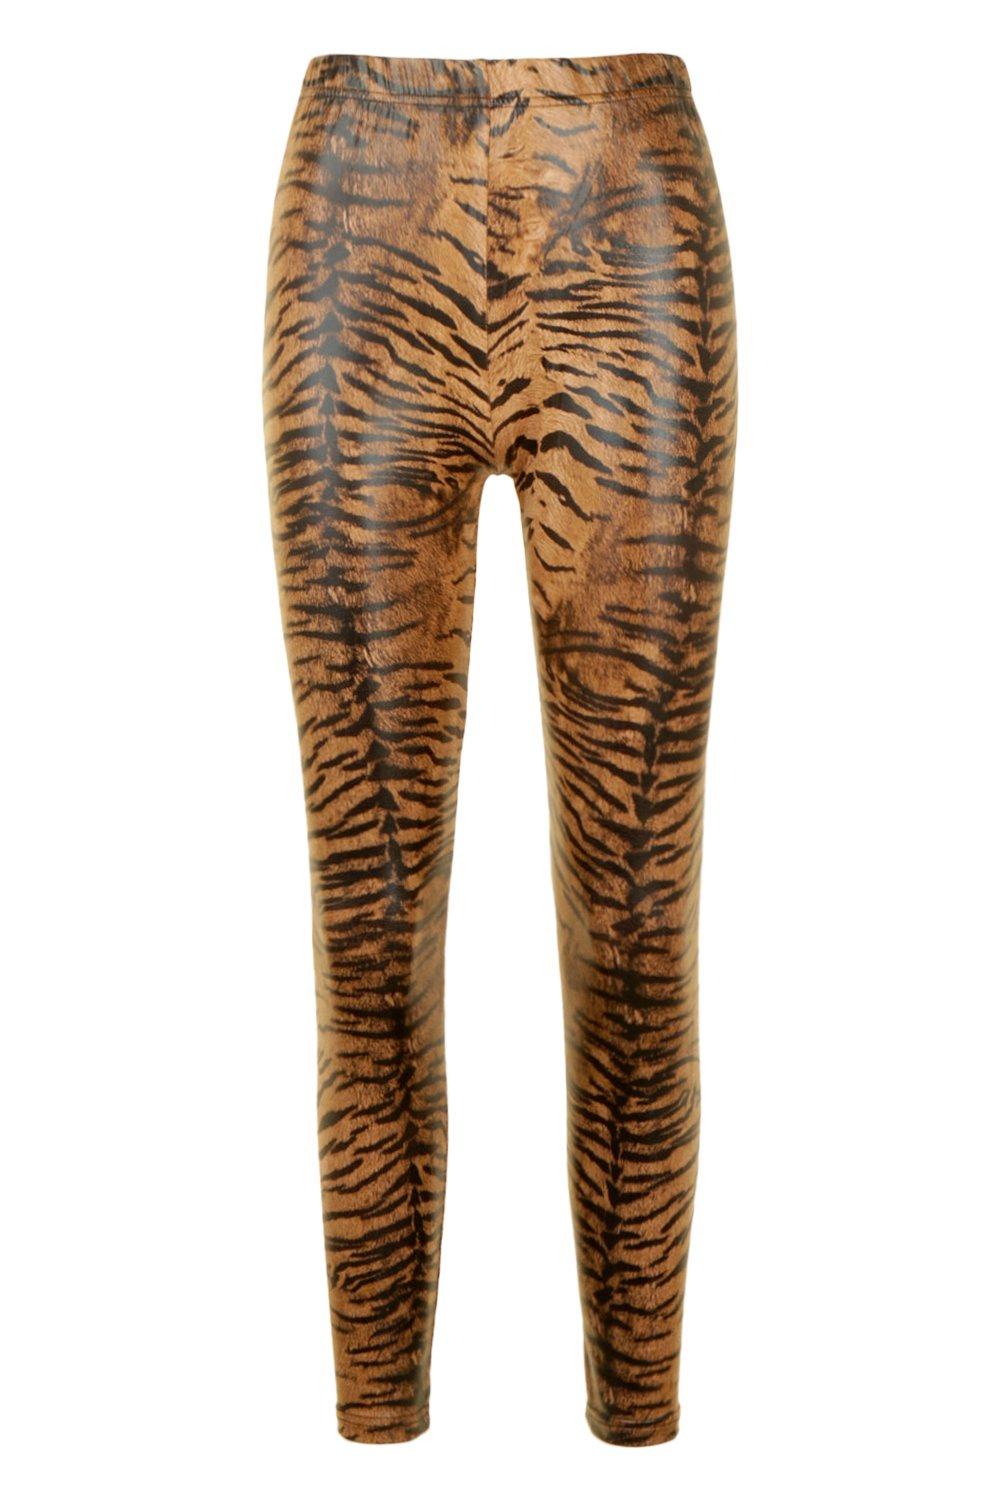 https://media.boohoo.com/i/boohoo/dzz02036_brown_xl_2/tiger-print-leather-look-legging